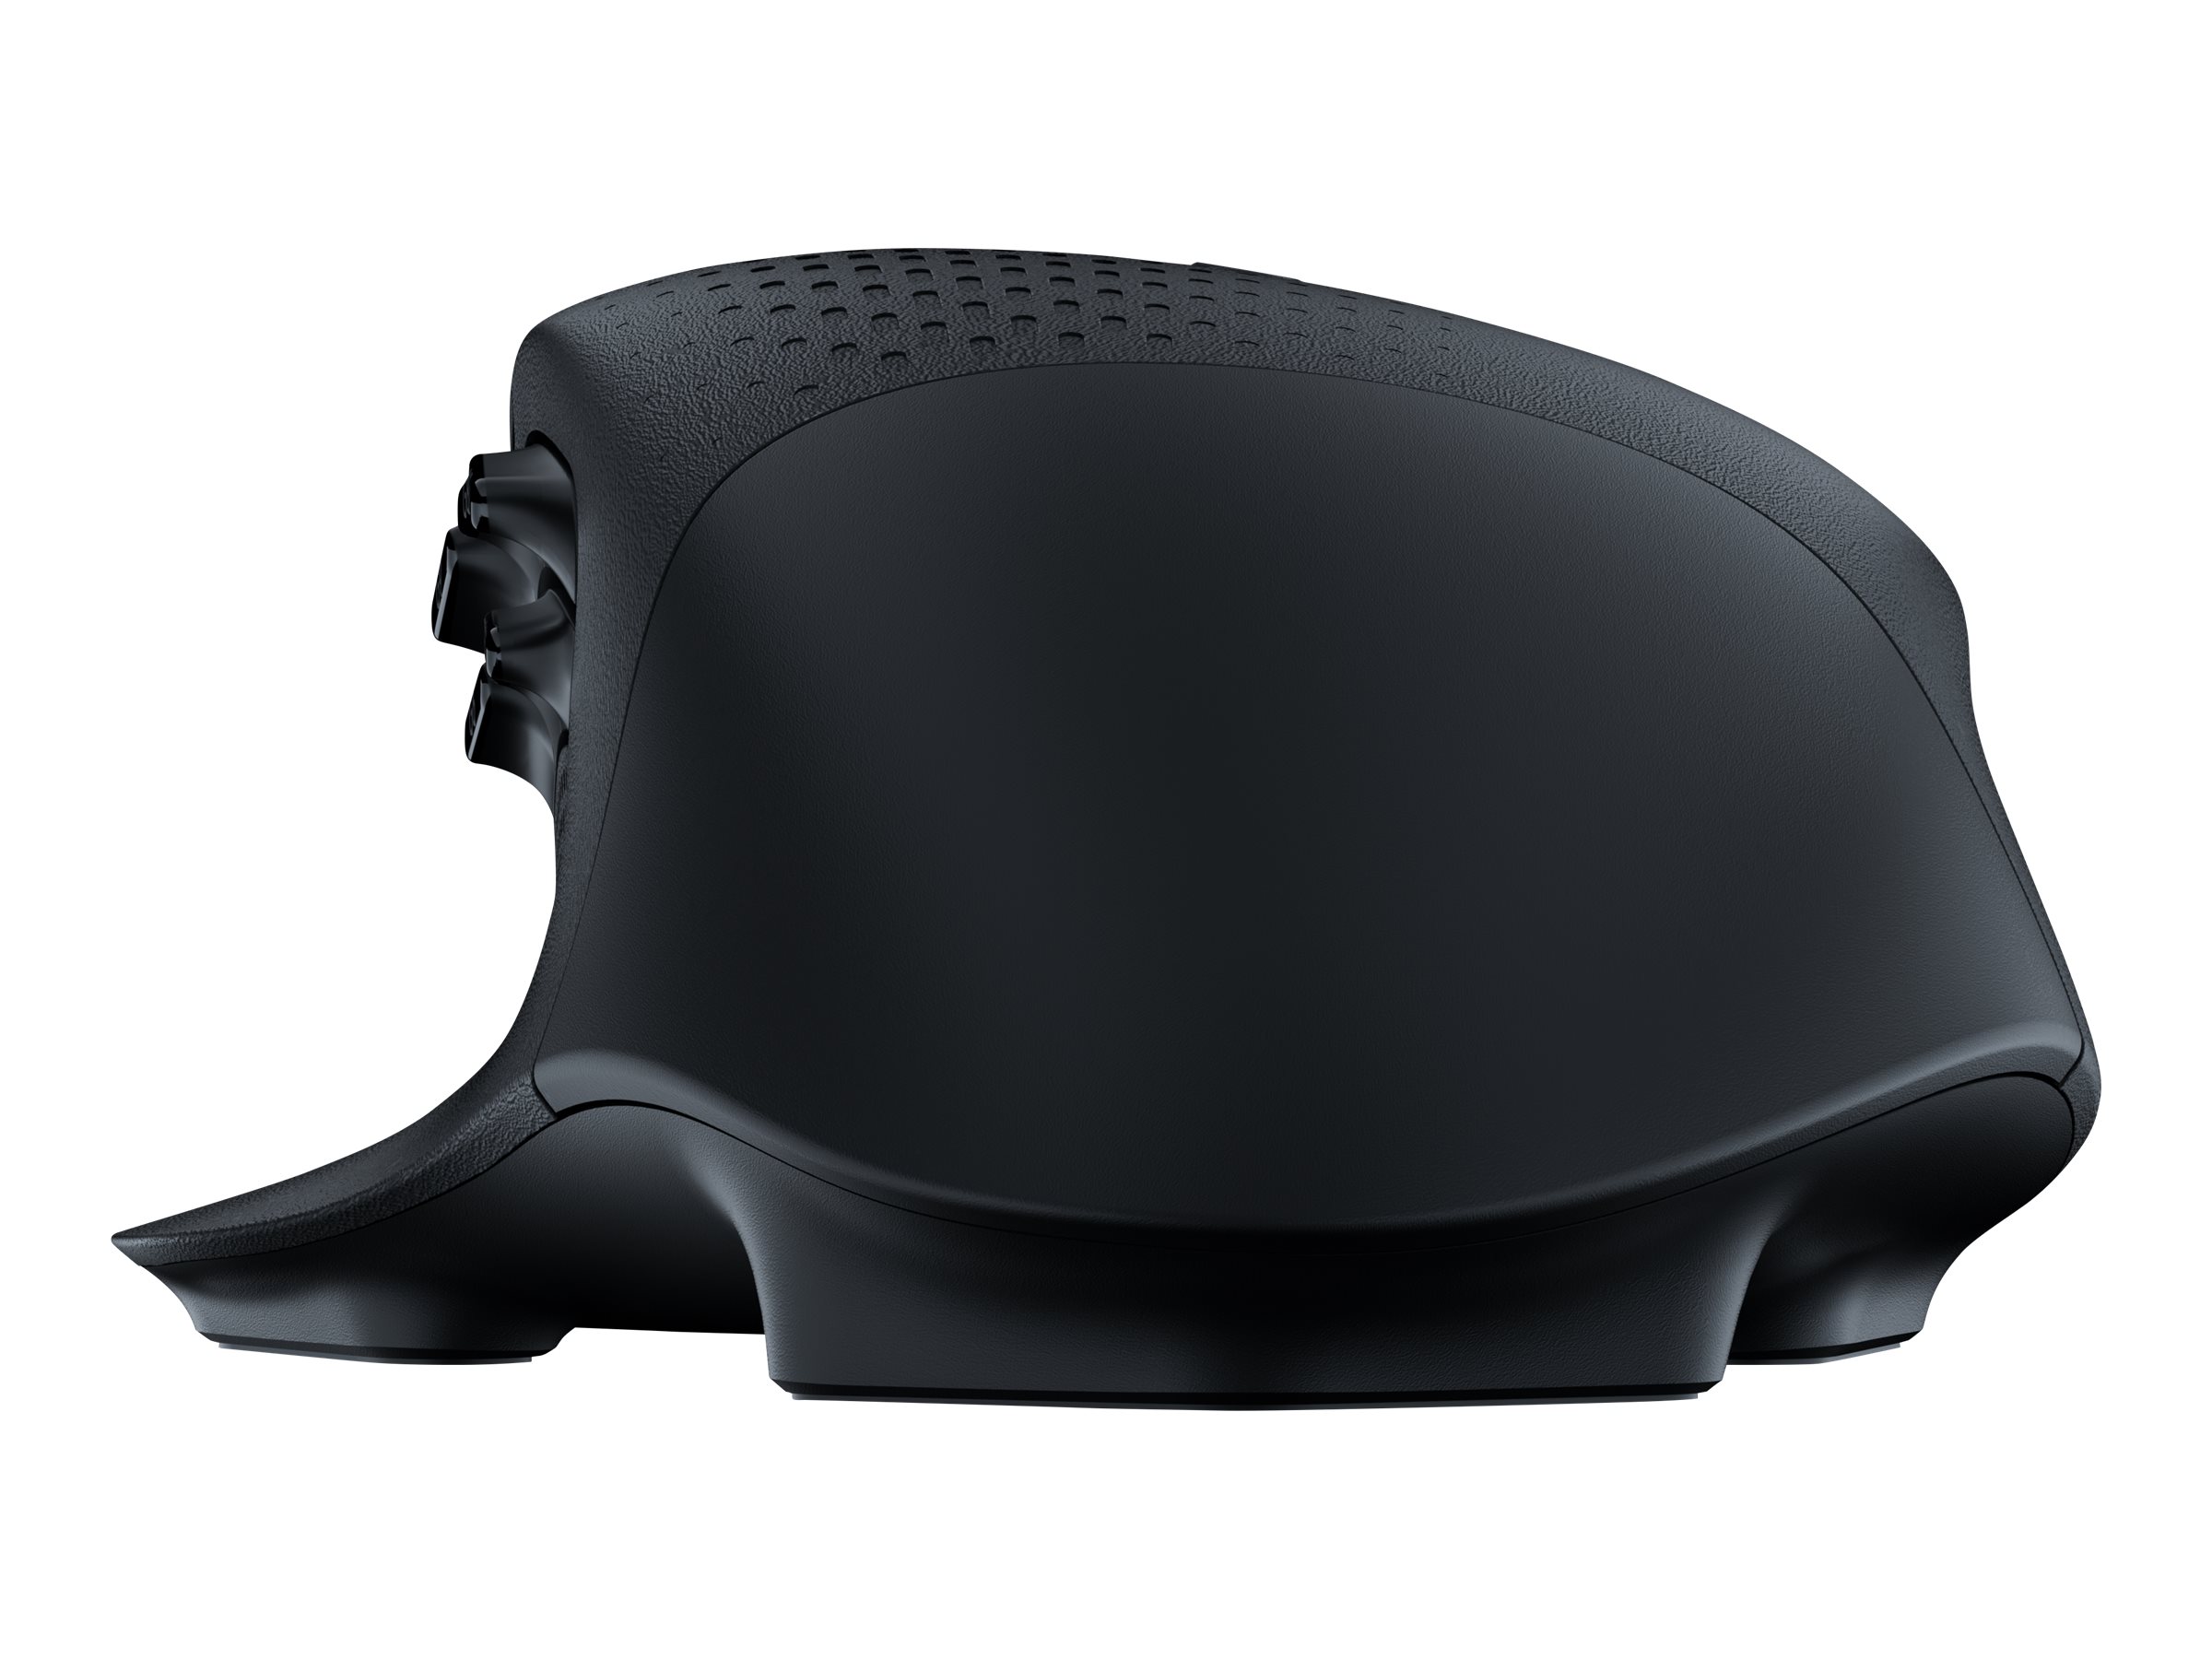 Logitech Gaming Mouse G604 - Maus - optisch - 15 Tasten